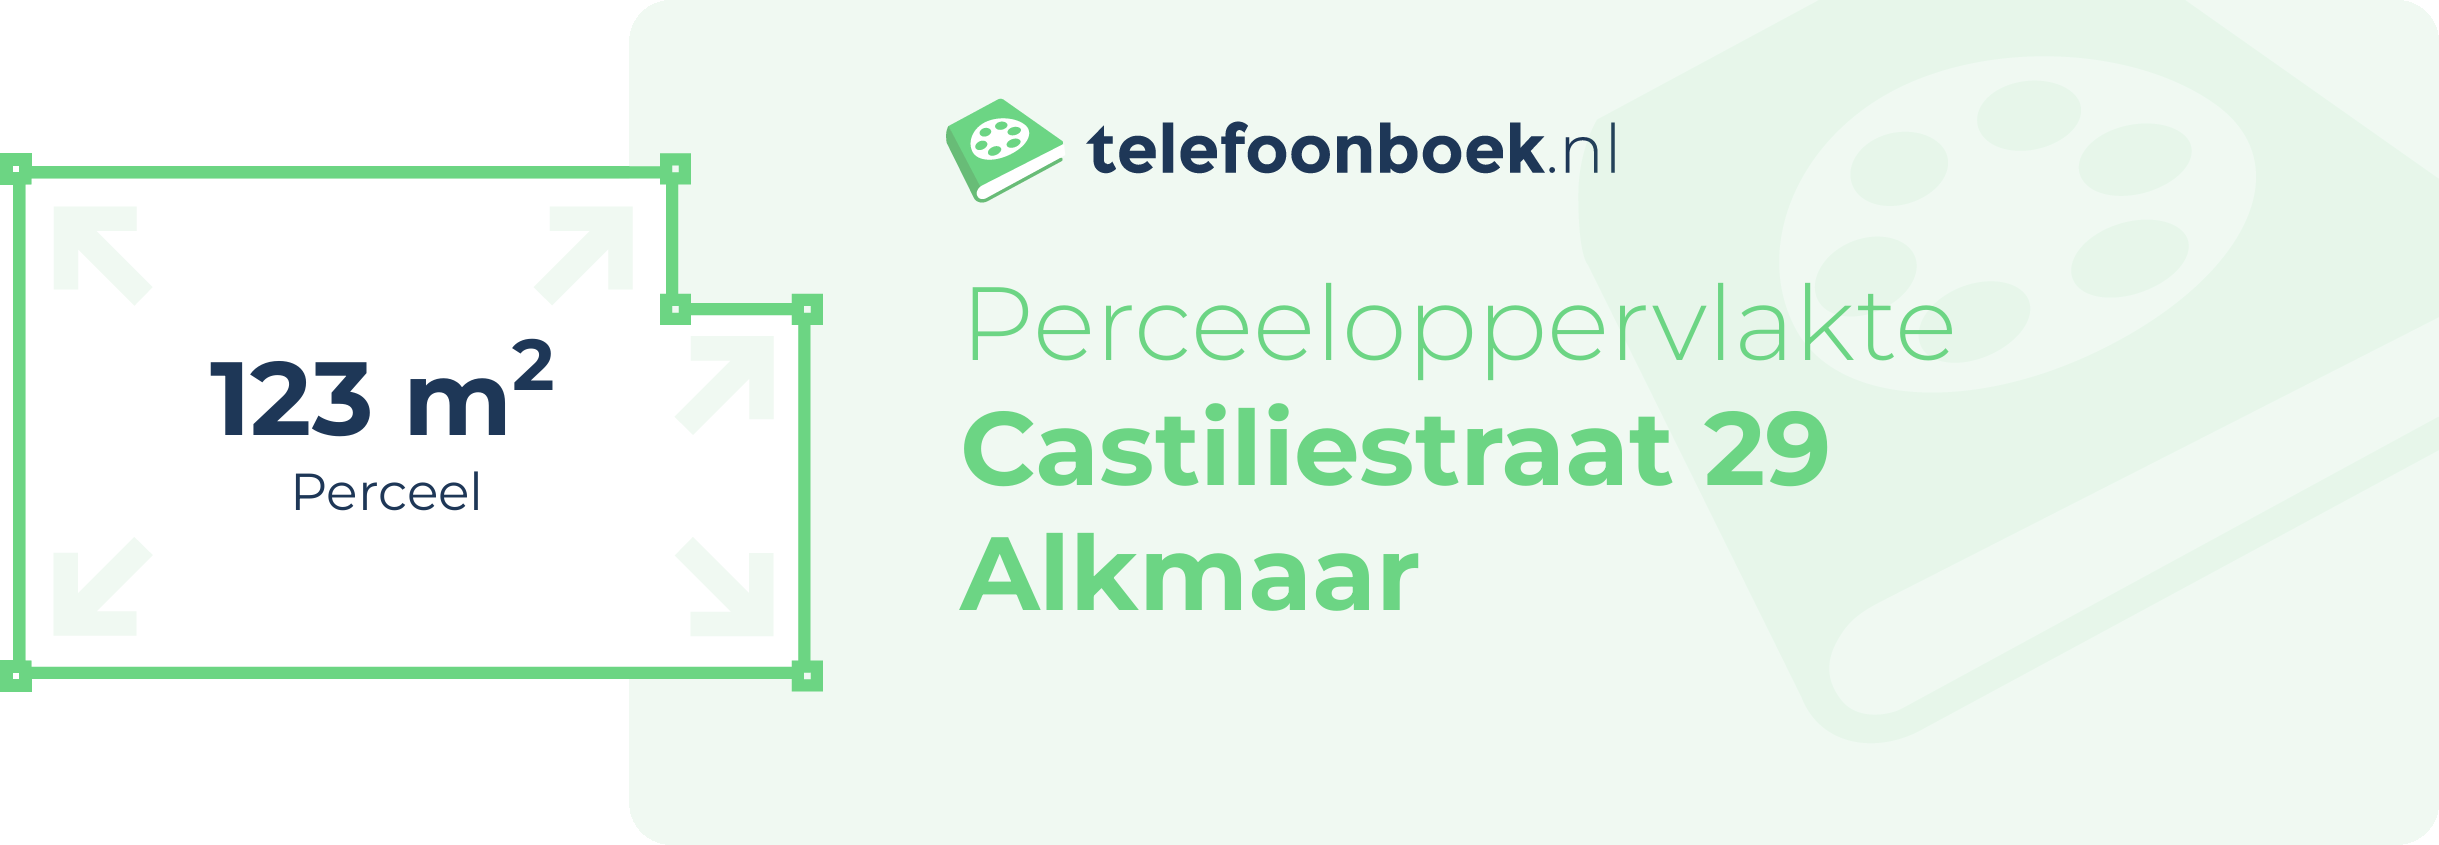 Perceeloppervlakte Castiliestraat 29 Alkmaar